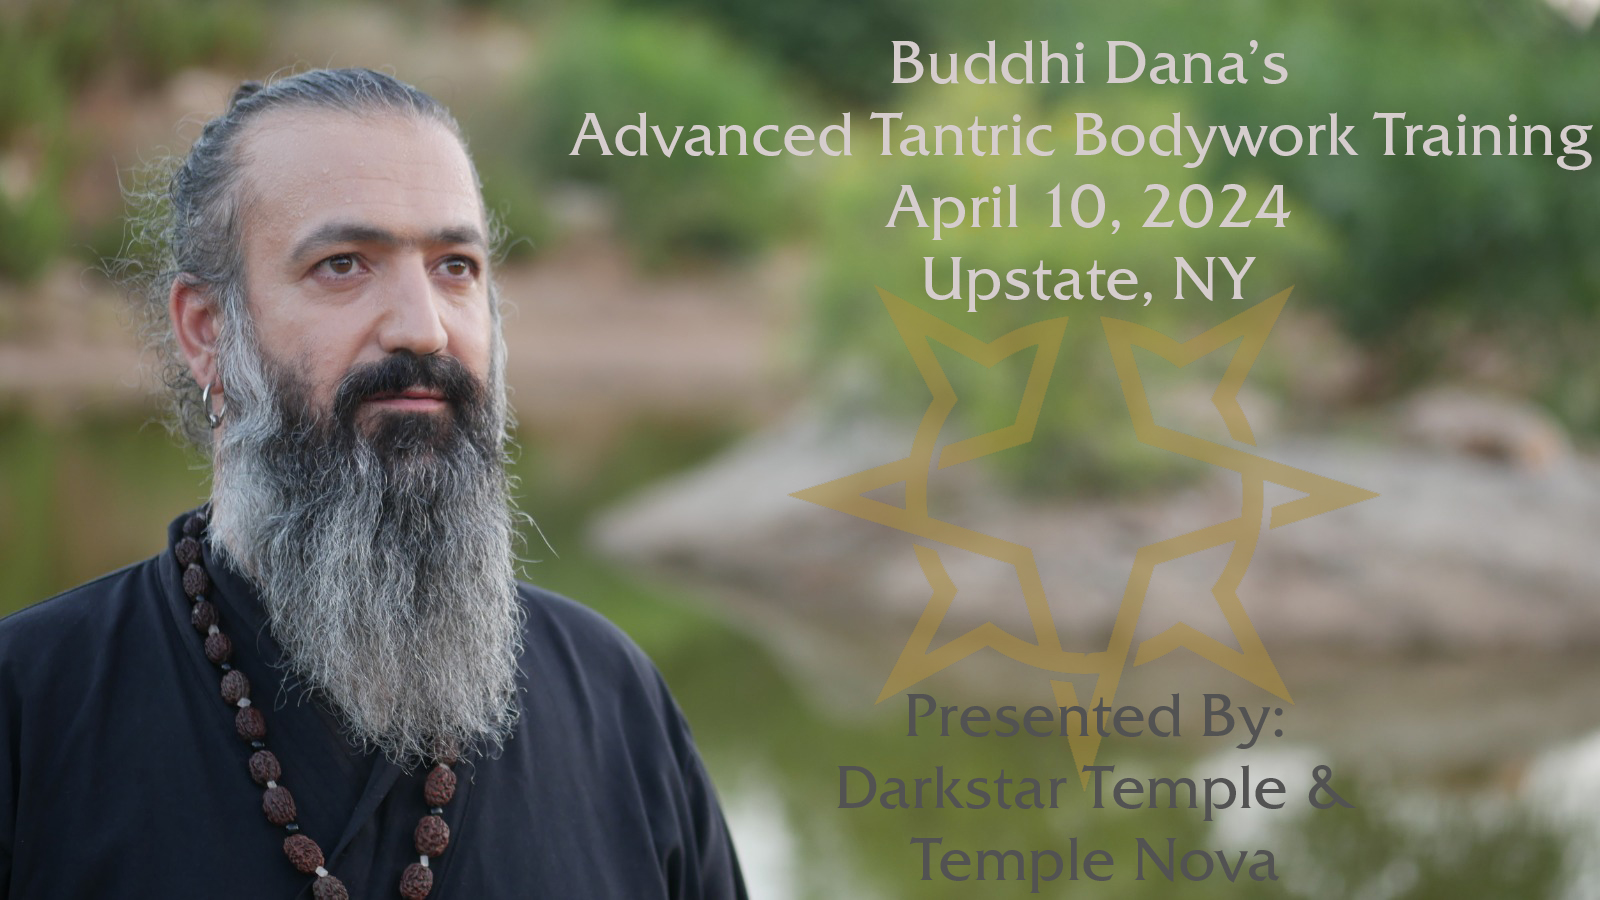 Buddhi Dana Advanced Tantric Bodywork Training